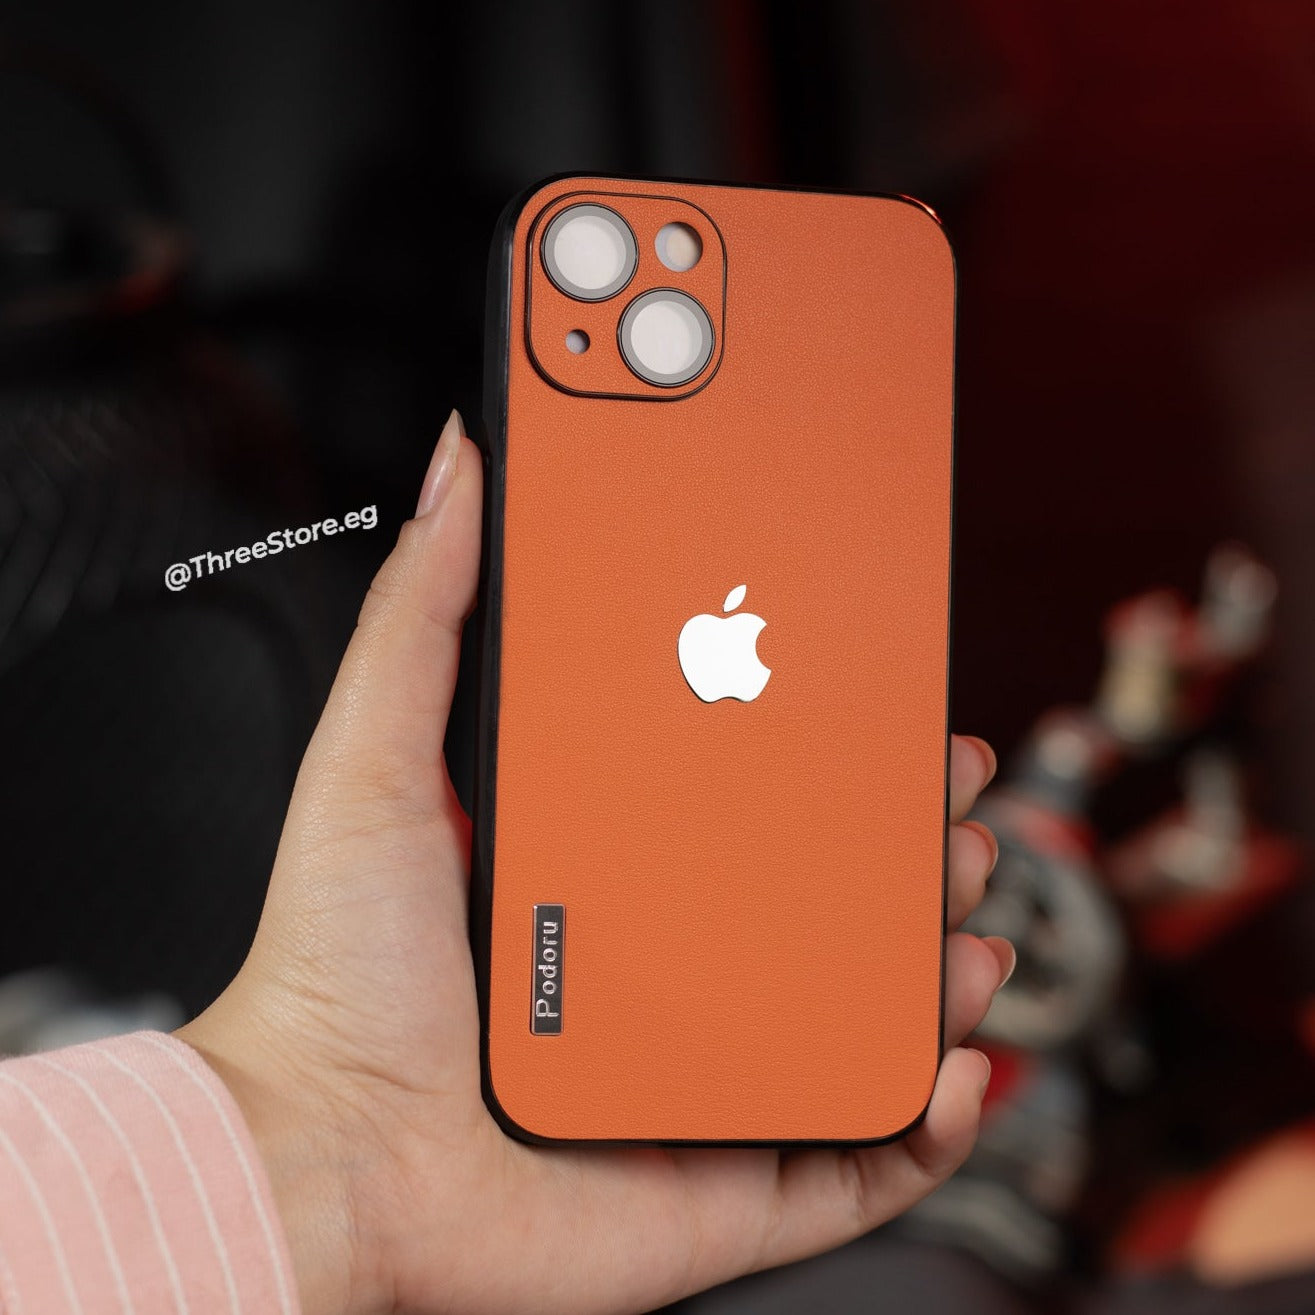 Podoru ShockProof Leather Case iPhone 13